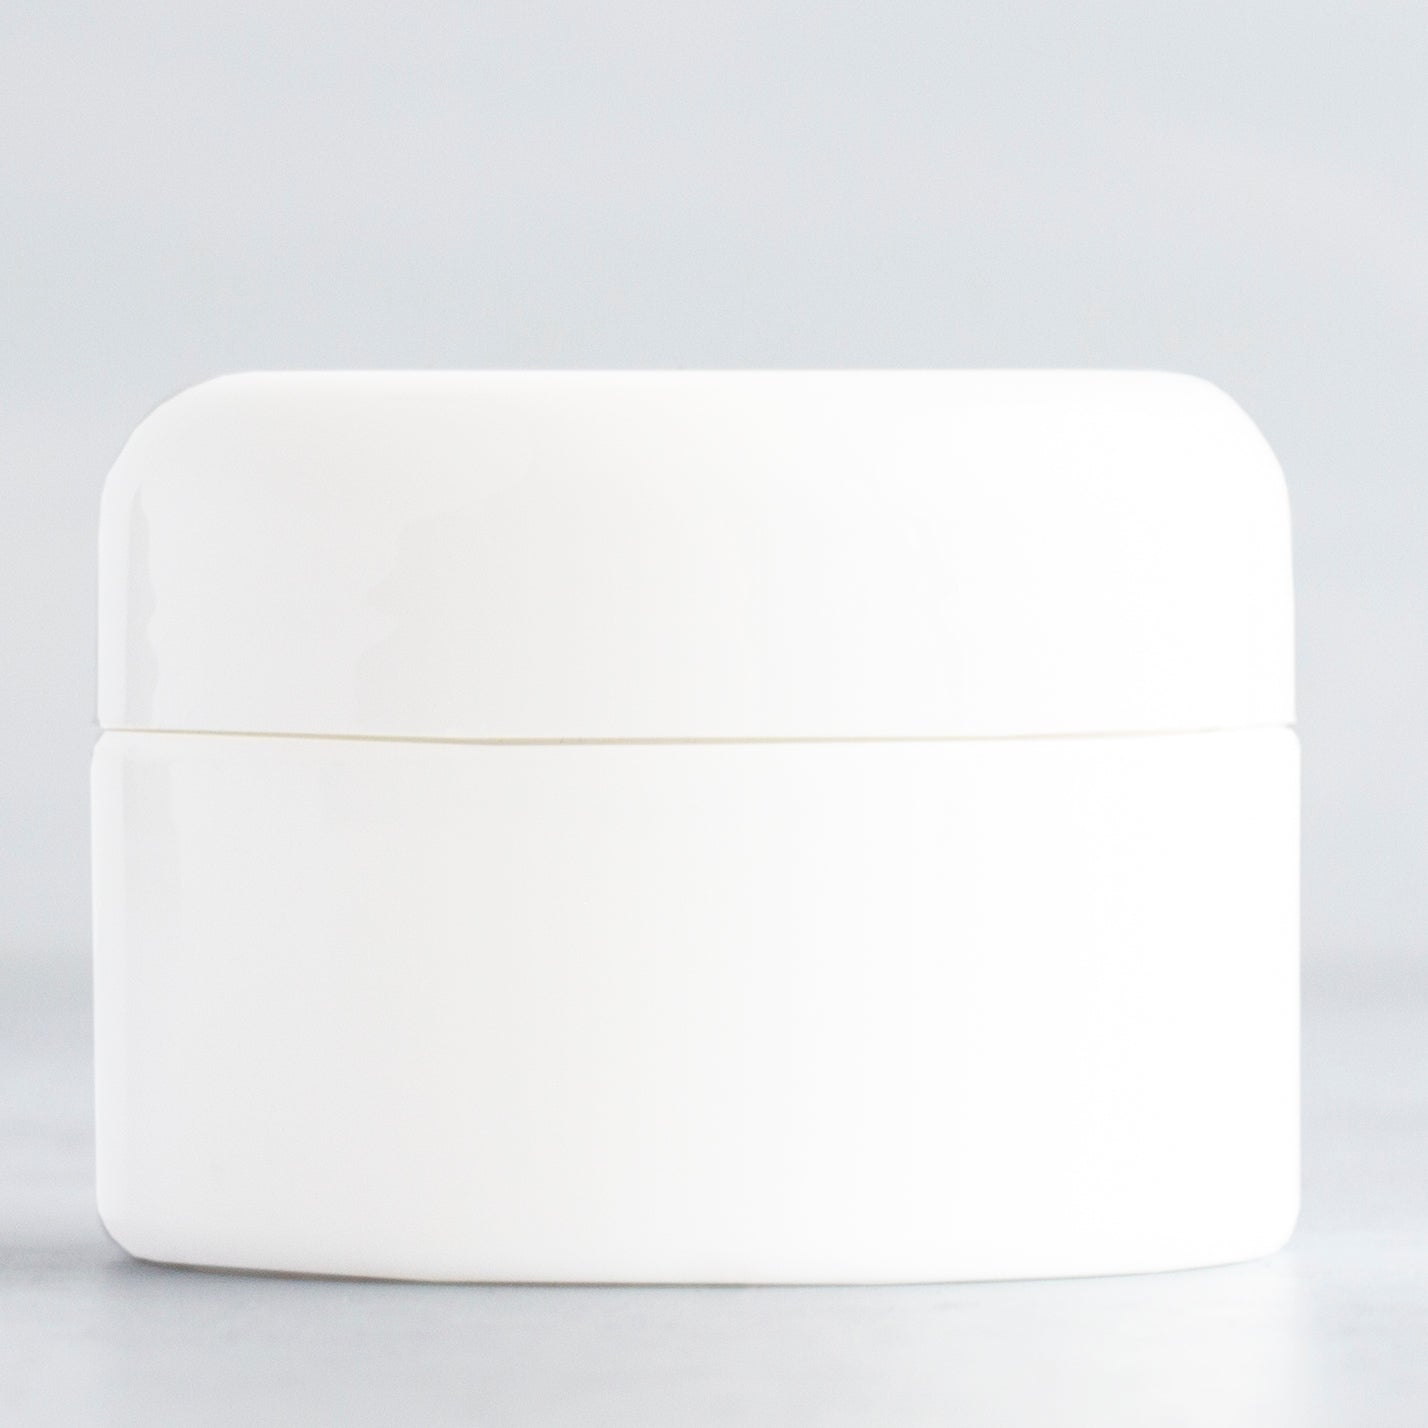 0.5 oz White Square Base Plastic Jar with White Dome Cap